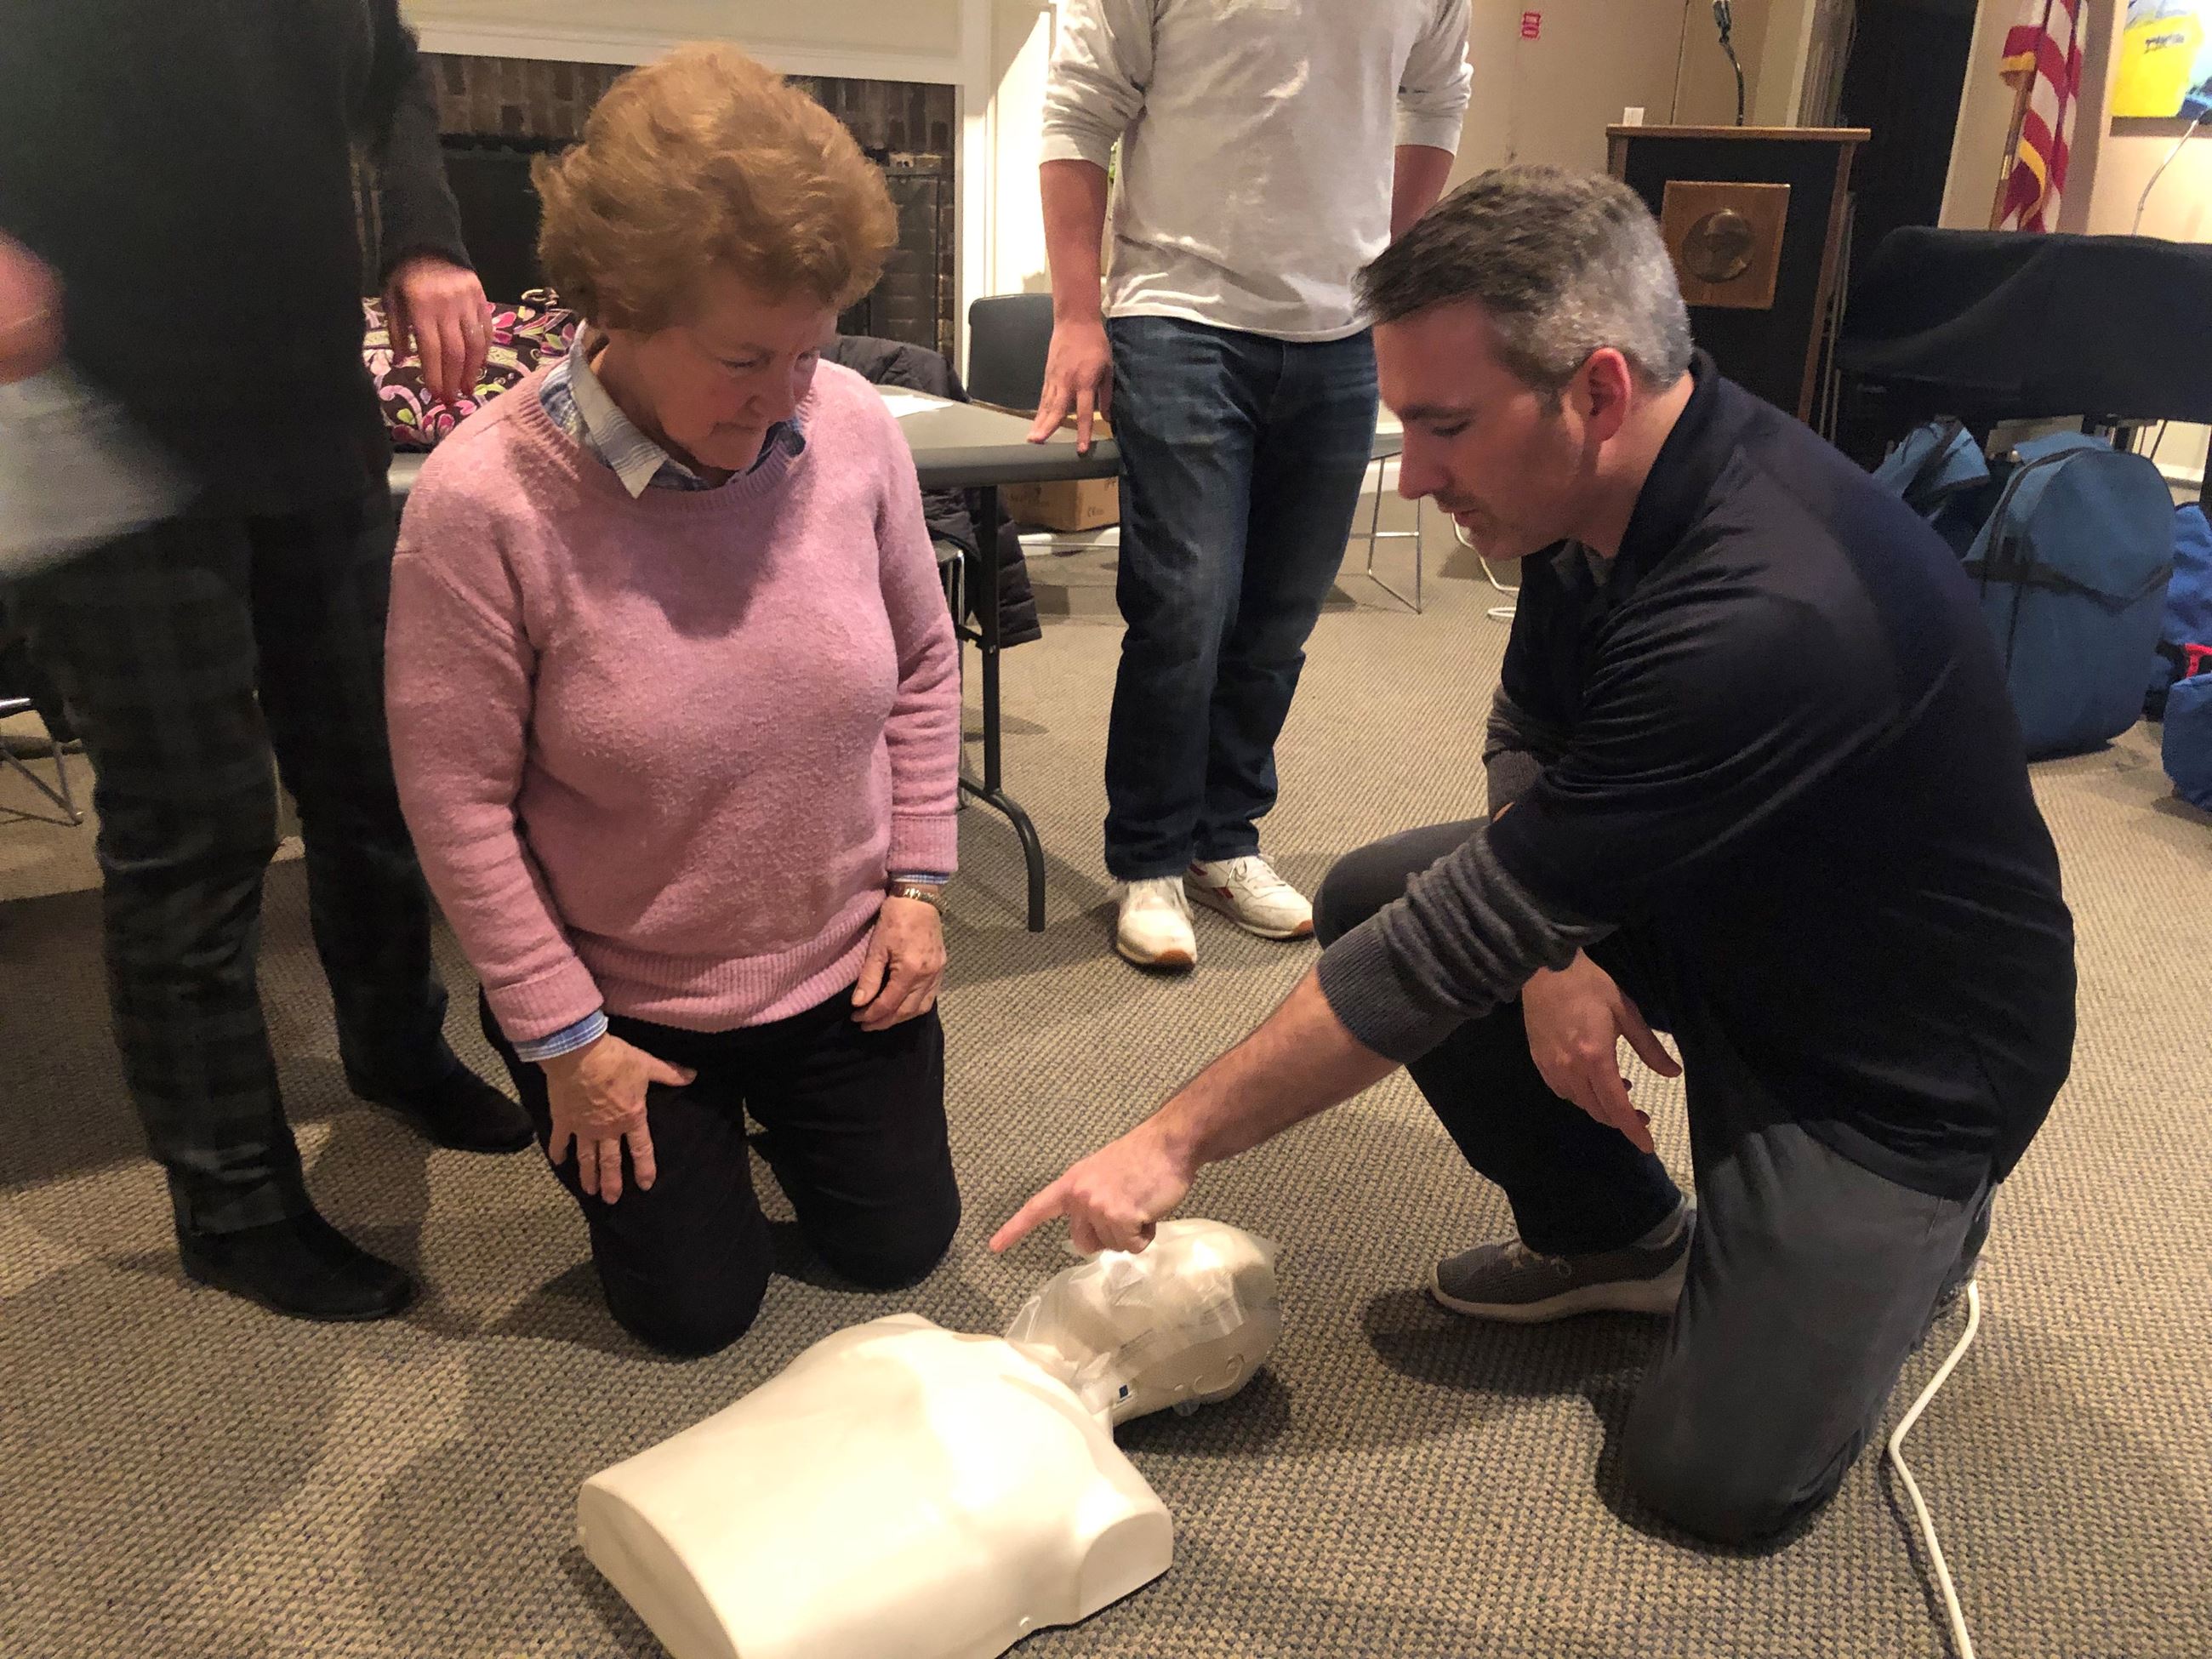 Lafazan and DeRiggi Whitton - CPR training